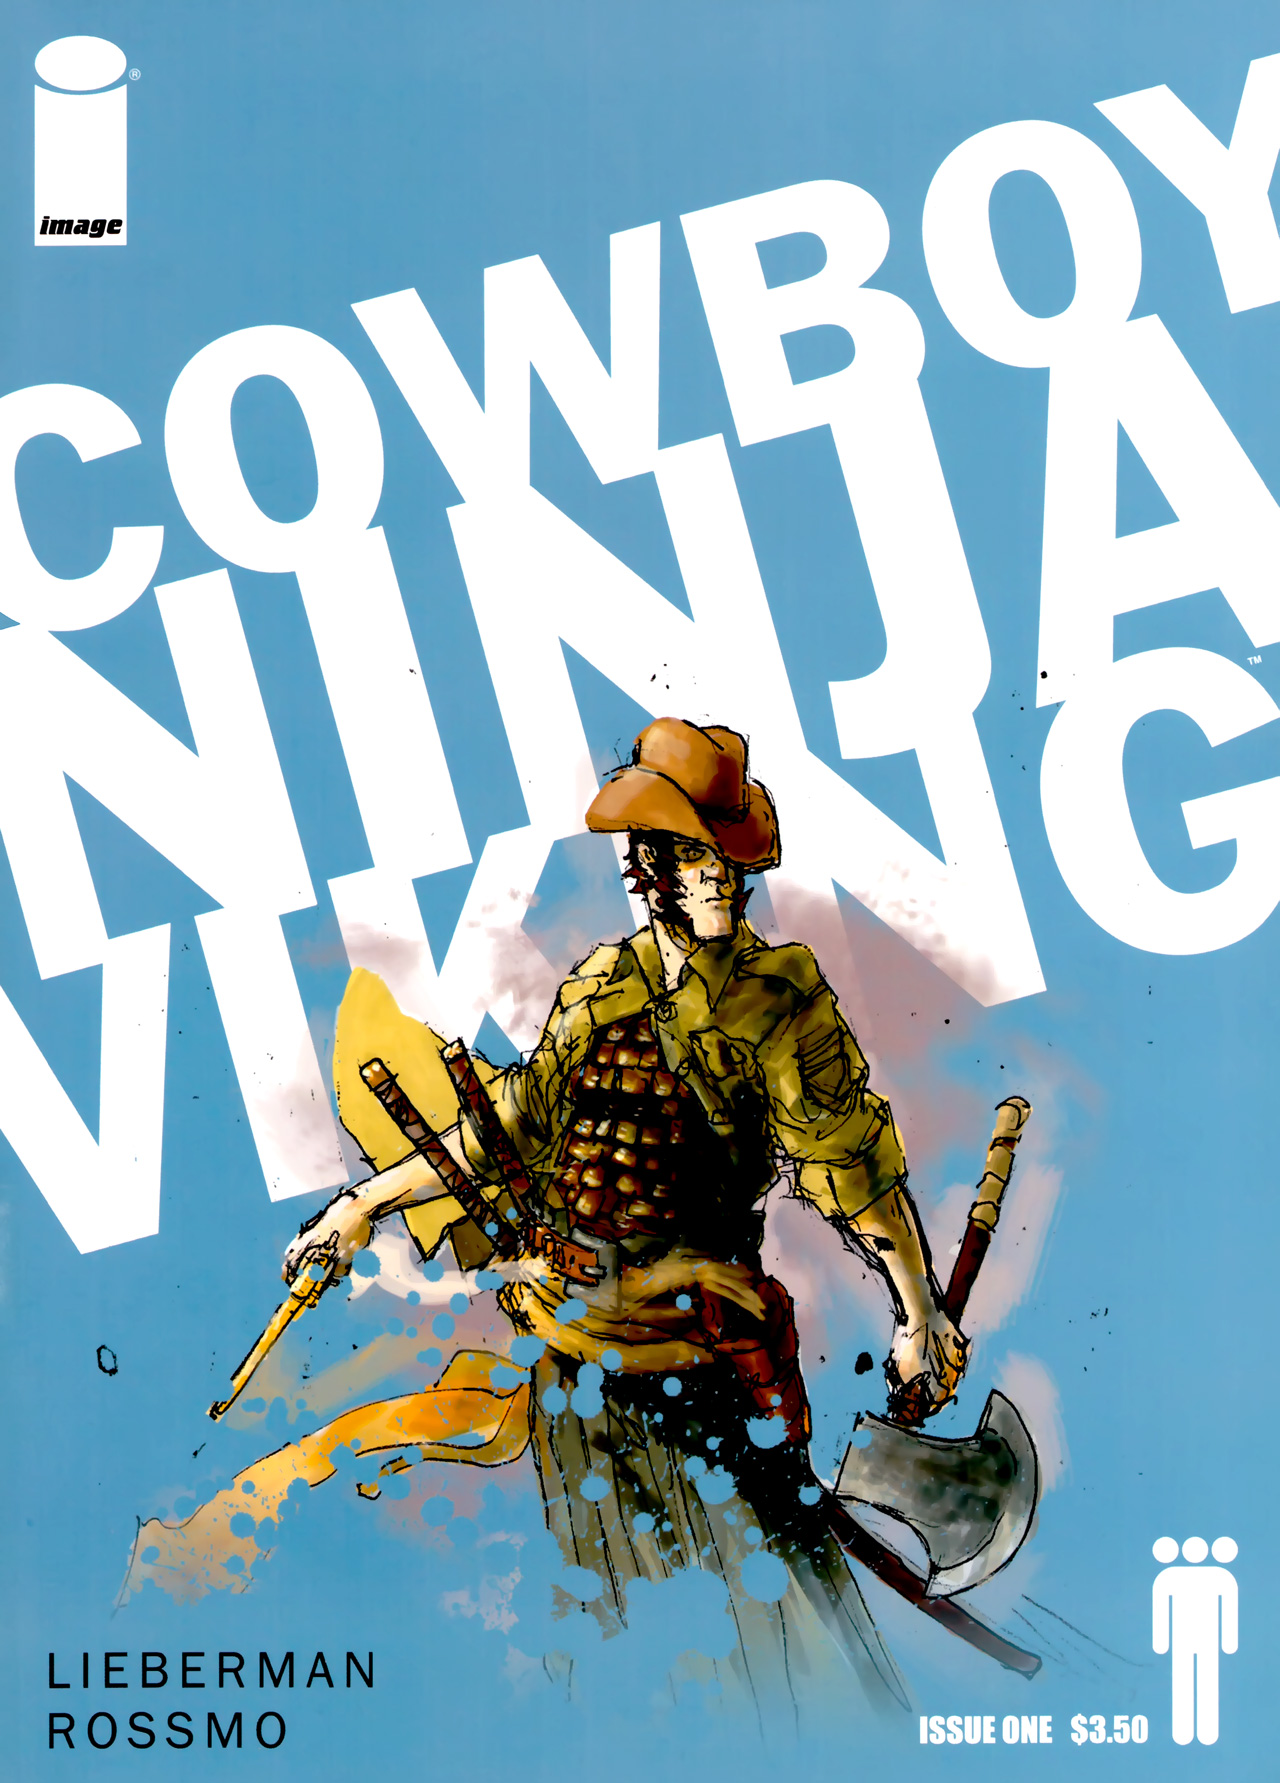 Read online Cowboy Ninja Viking comic -  Issue #1 - 1